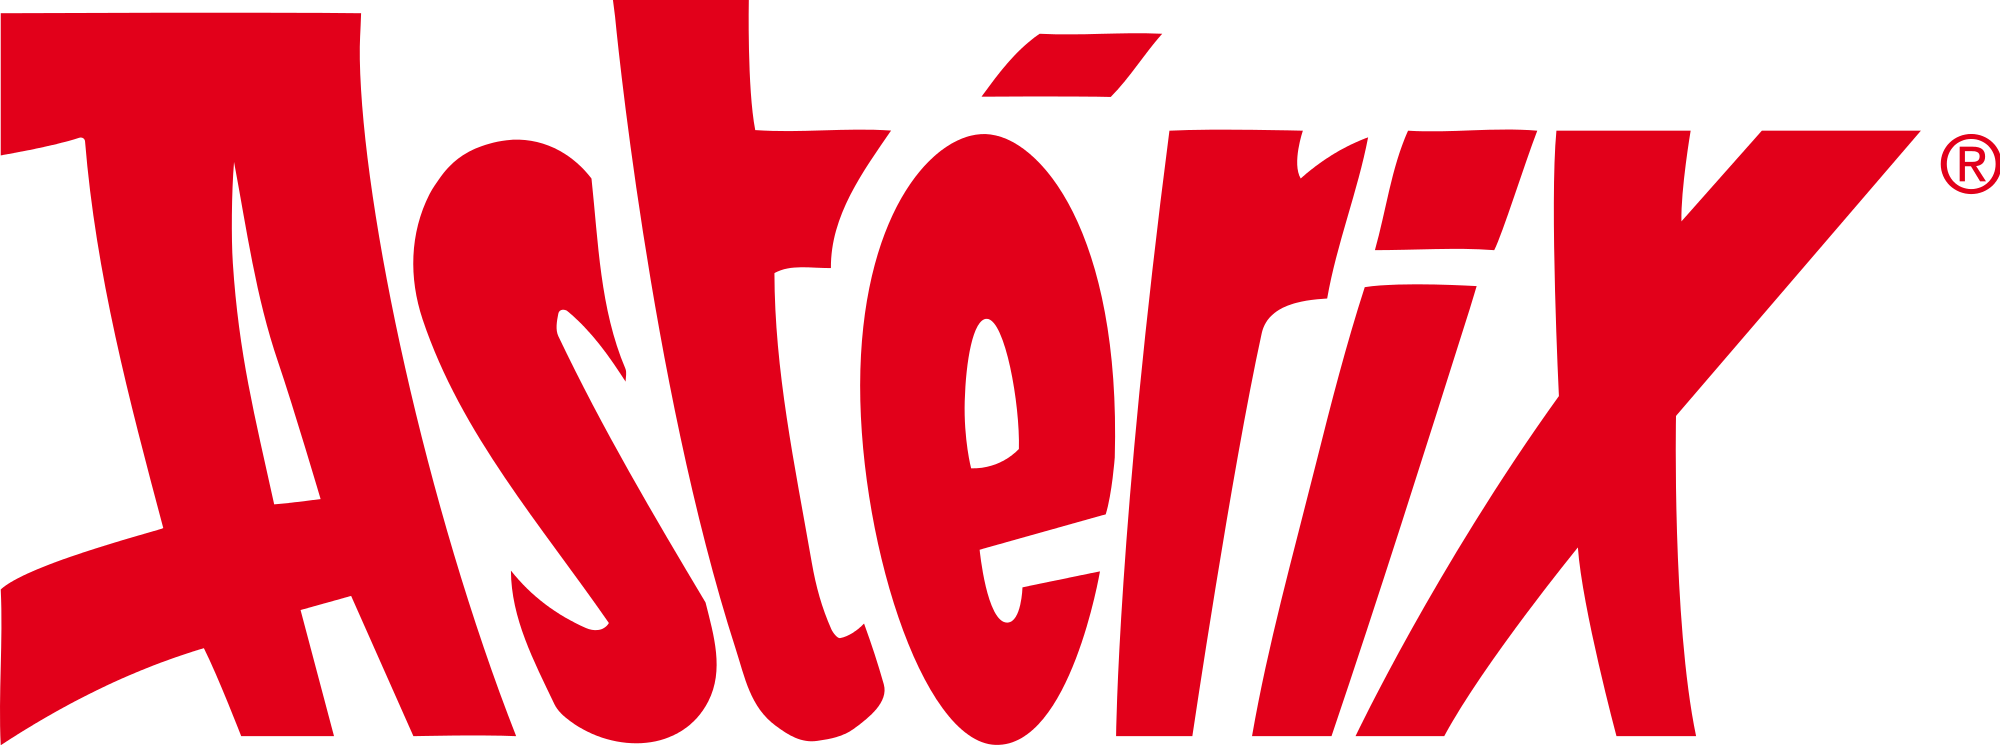 Asterix 0 free vector